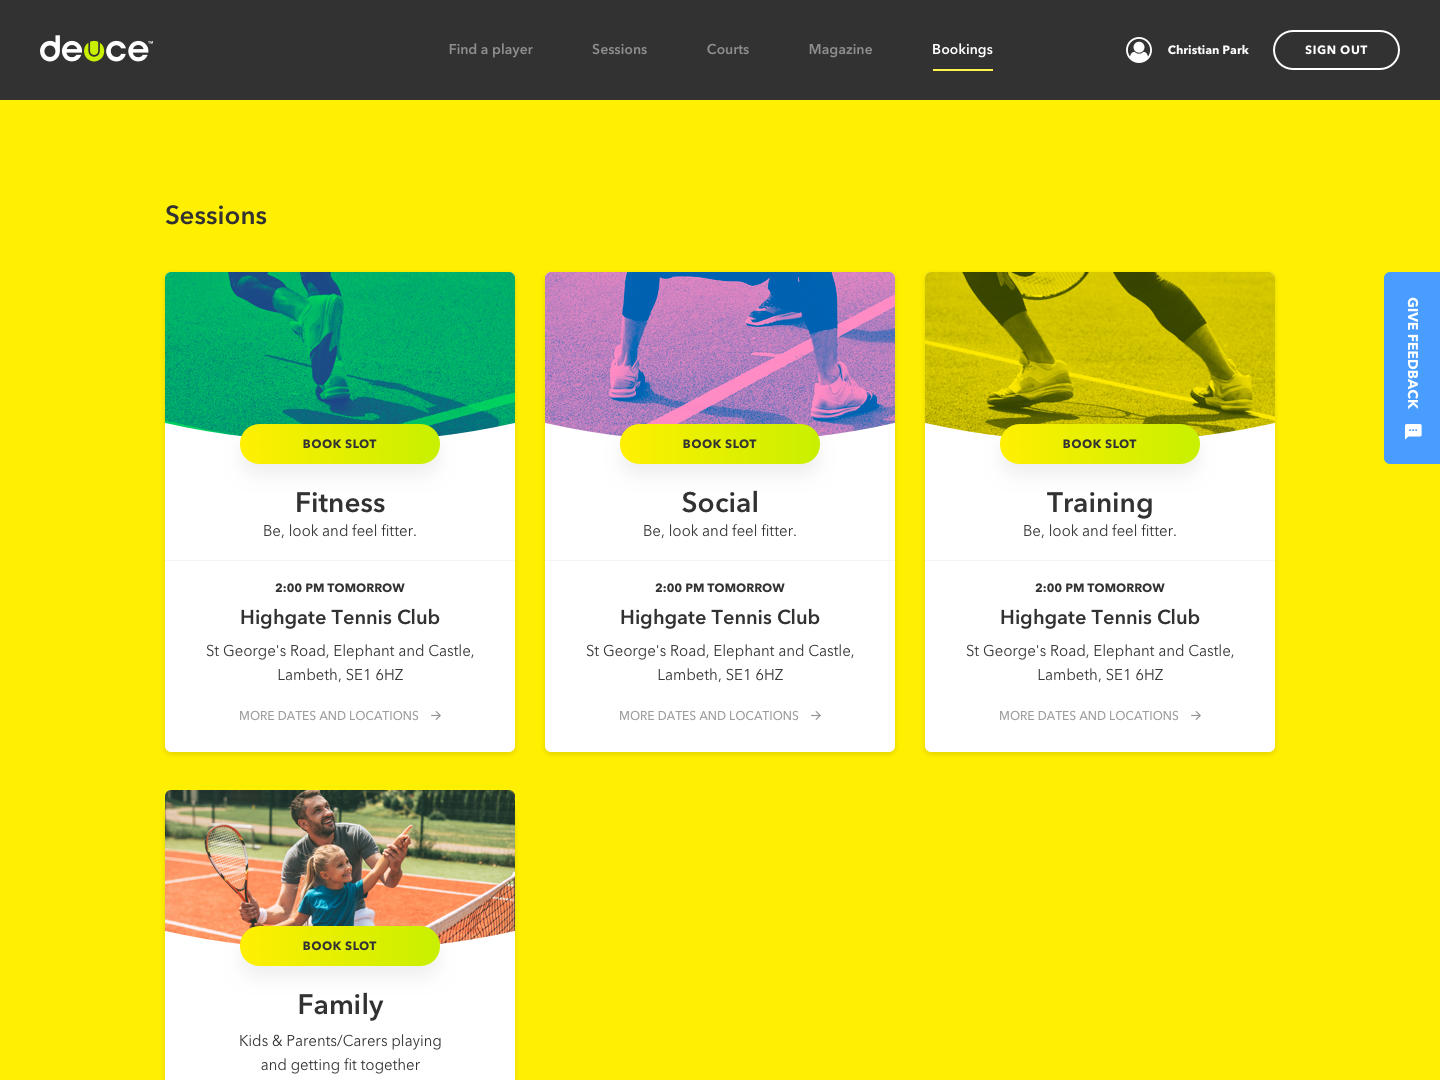 UK Tennis mobile app project built with React Native and Django - Deuce Tennis - Case Study